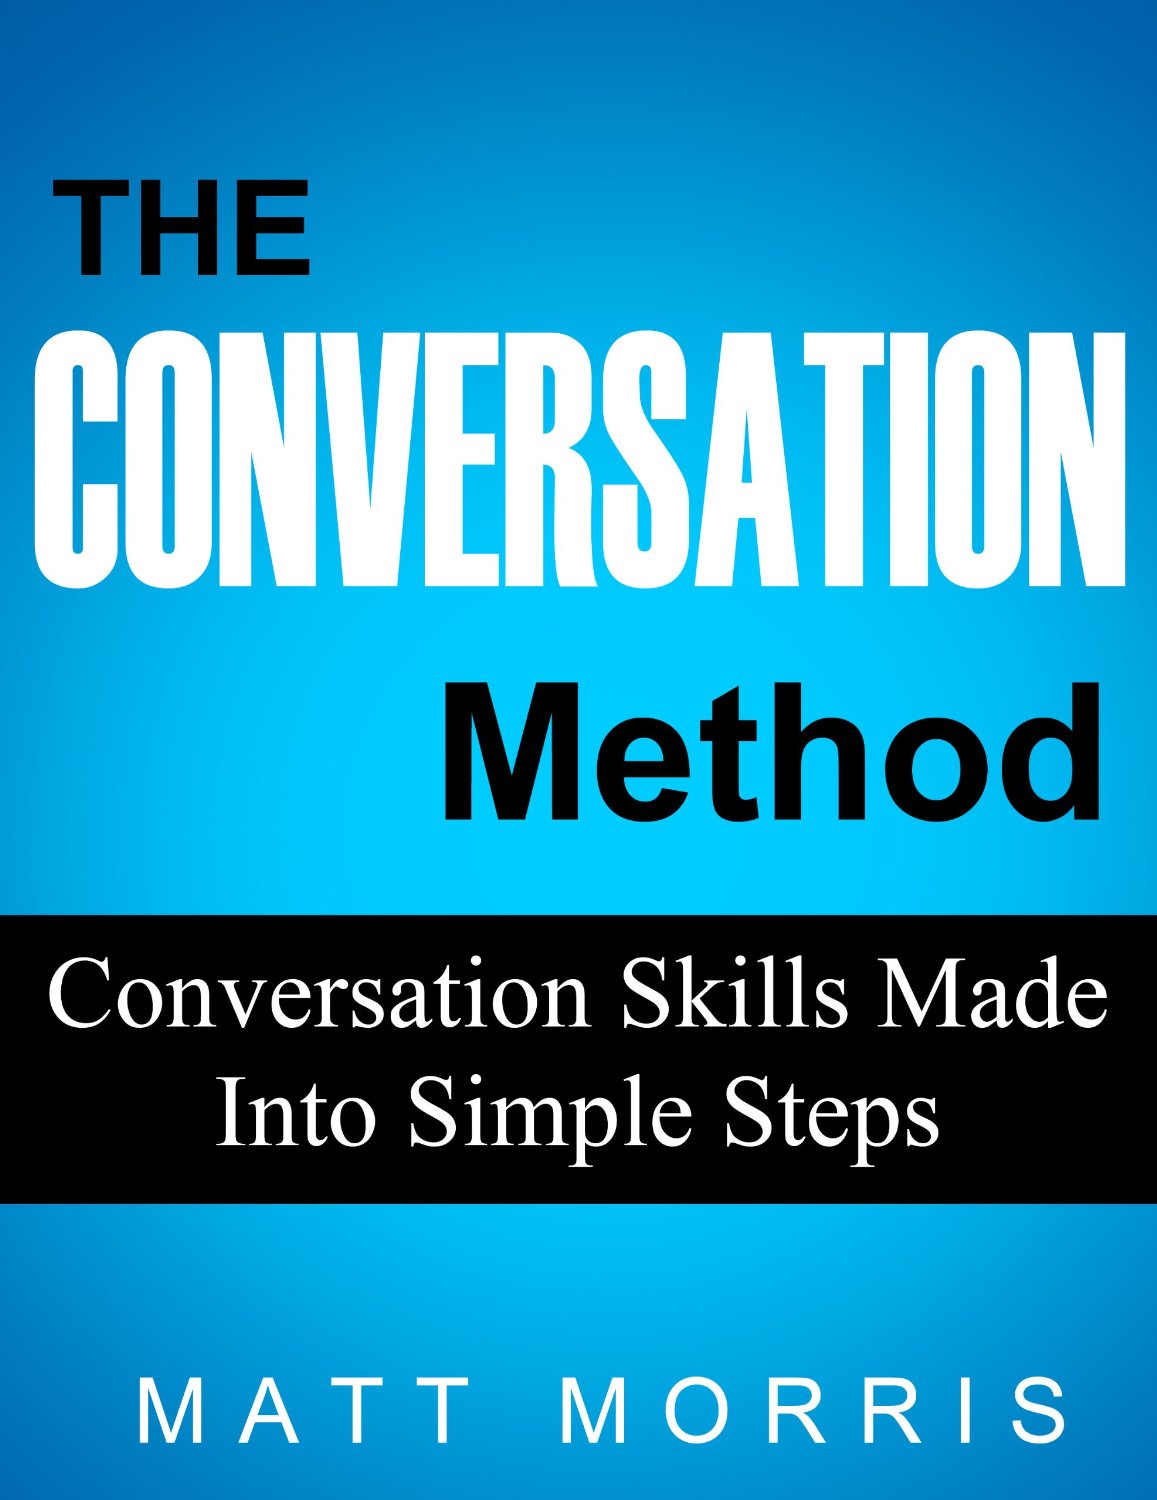 The Conversation Method – Conversation Skills Made Into Simple Steps by Matt Morris